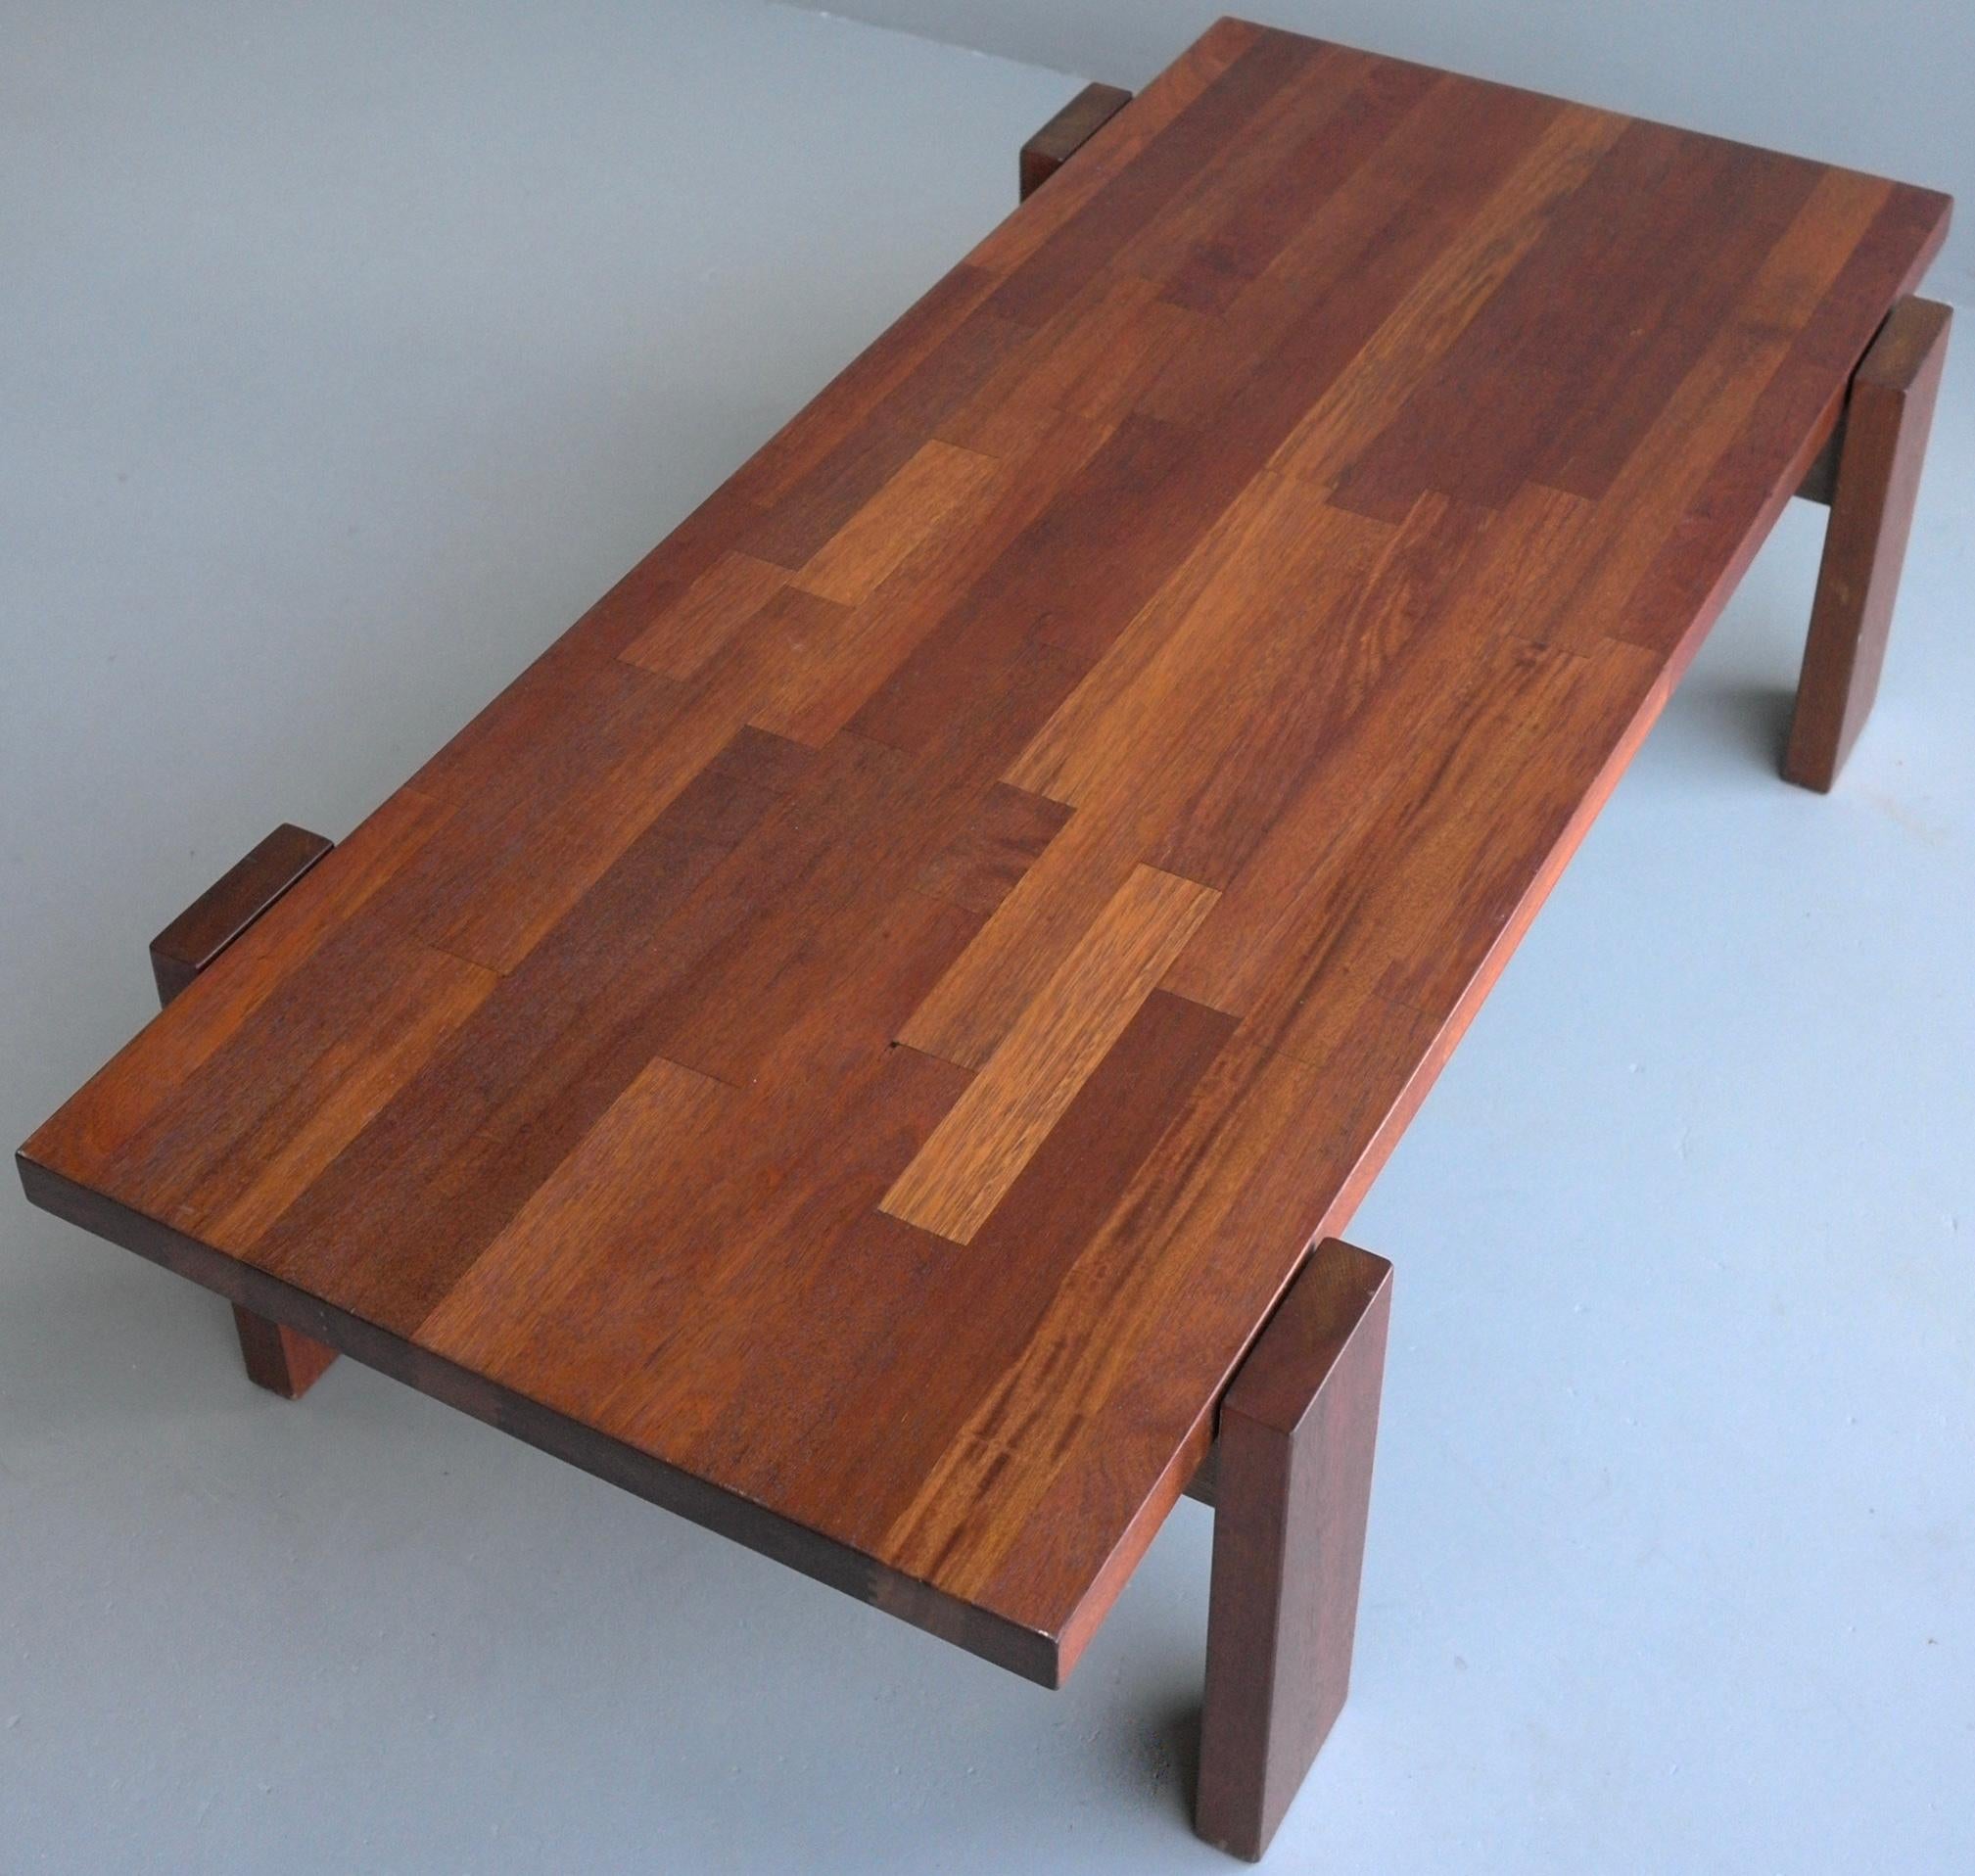 Robust hardwood coffee table in style of Jorge Zalszupin, Brazil, 1960s.